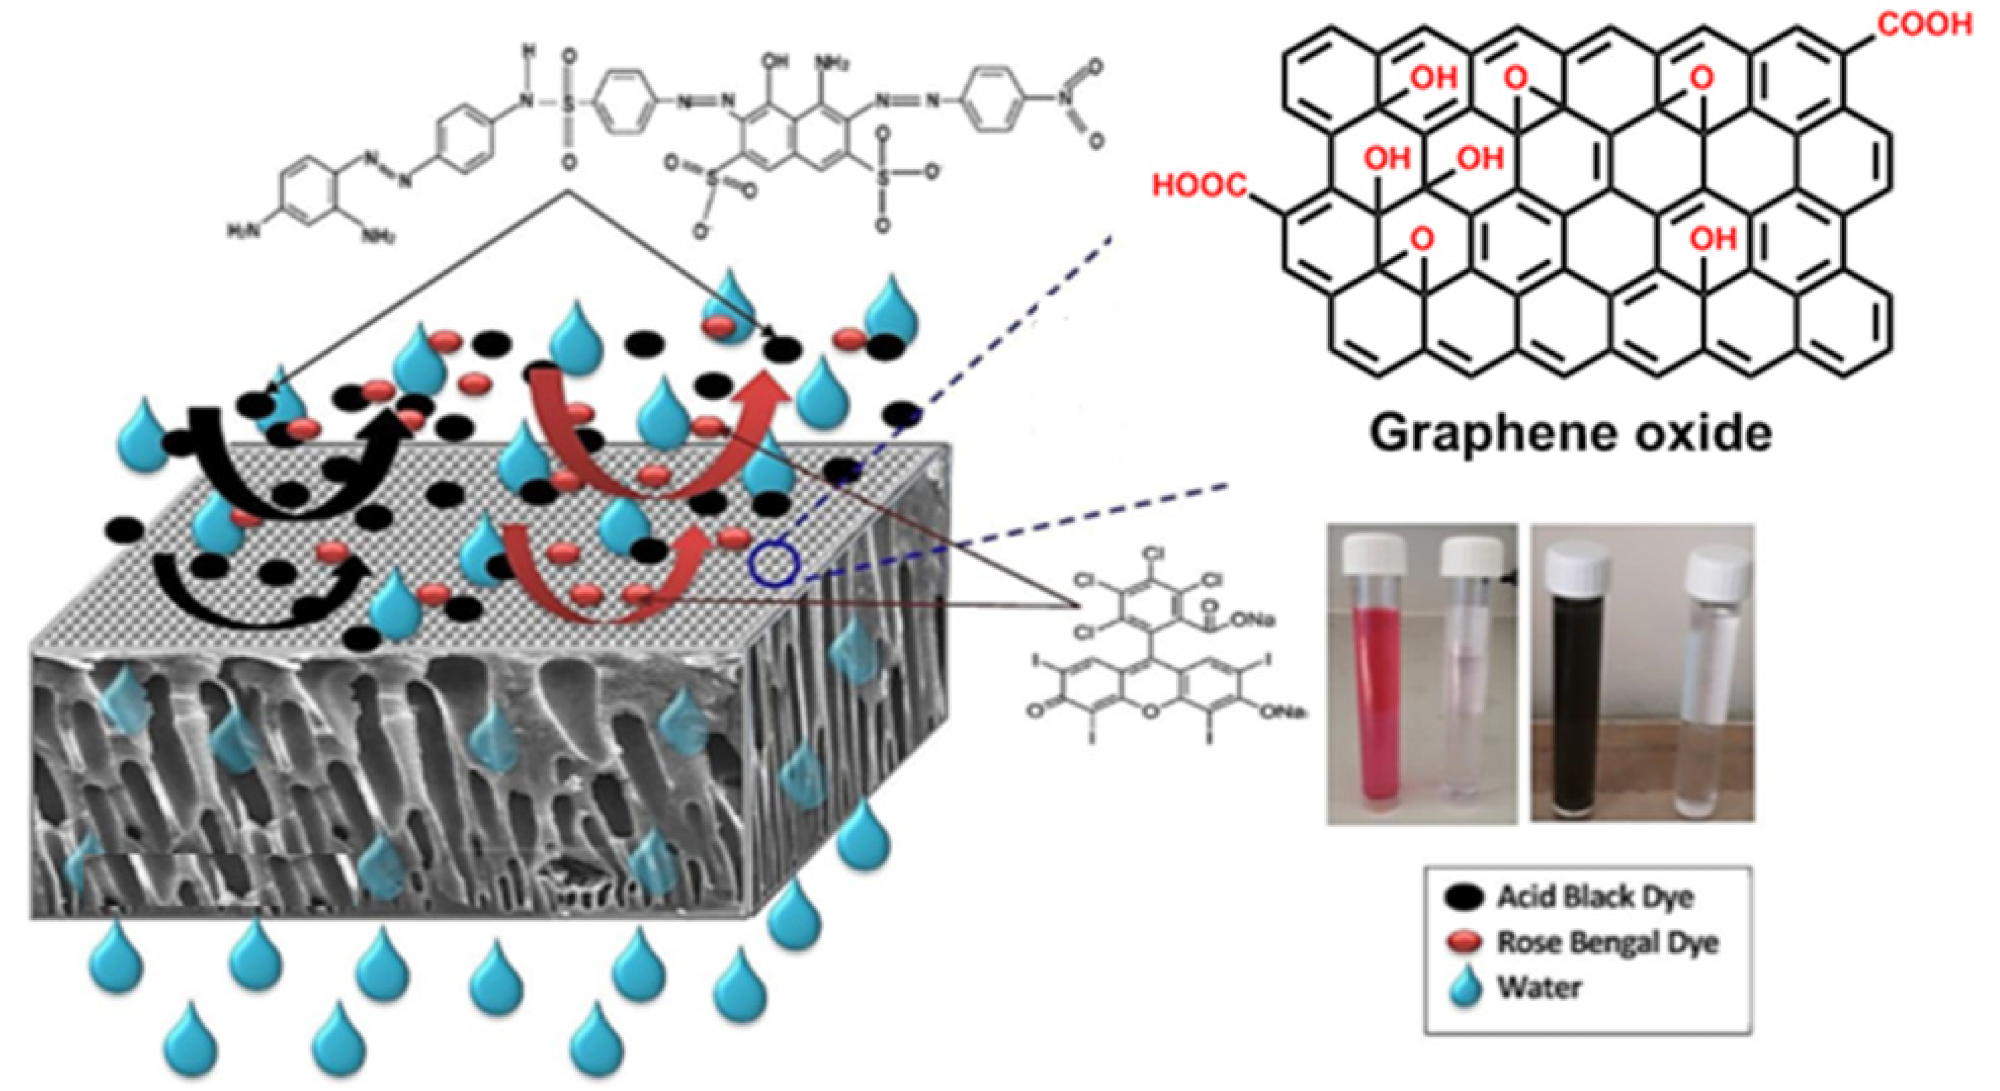 Dye removal using graphene oxide (GO) mixed matrix membranes [87].